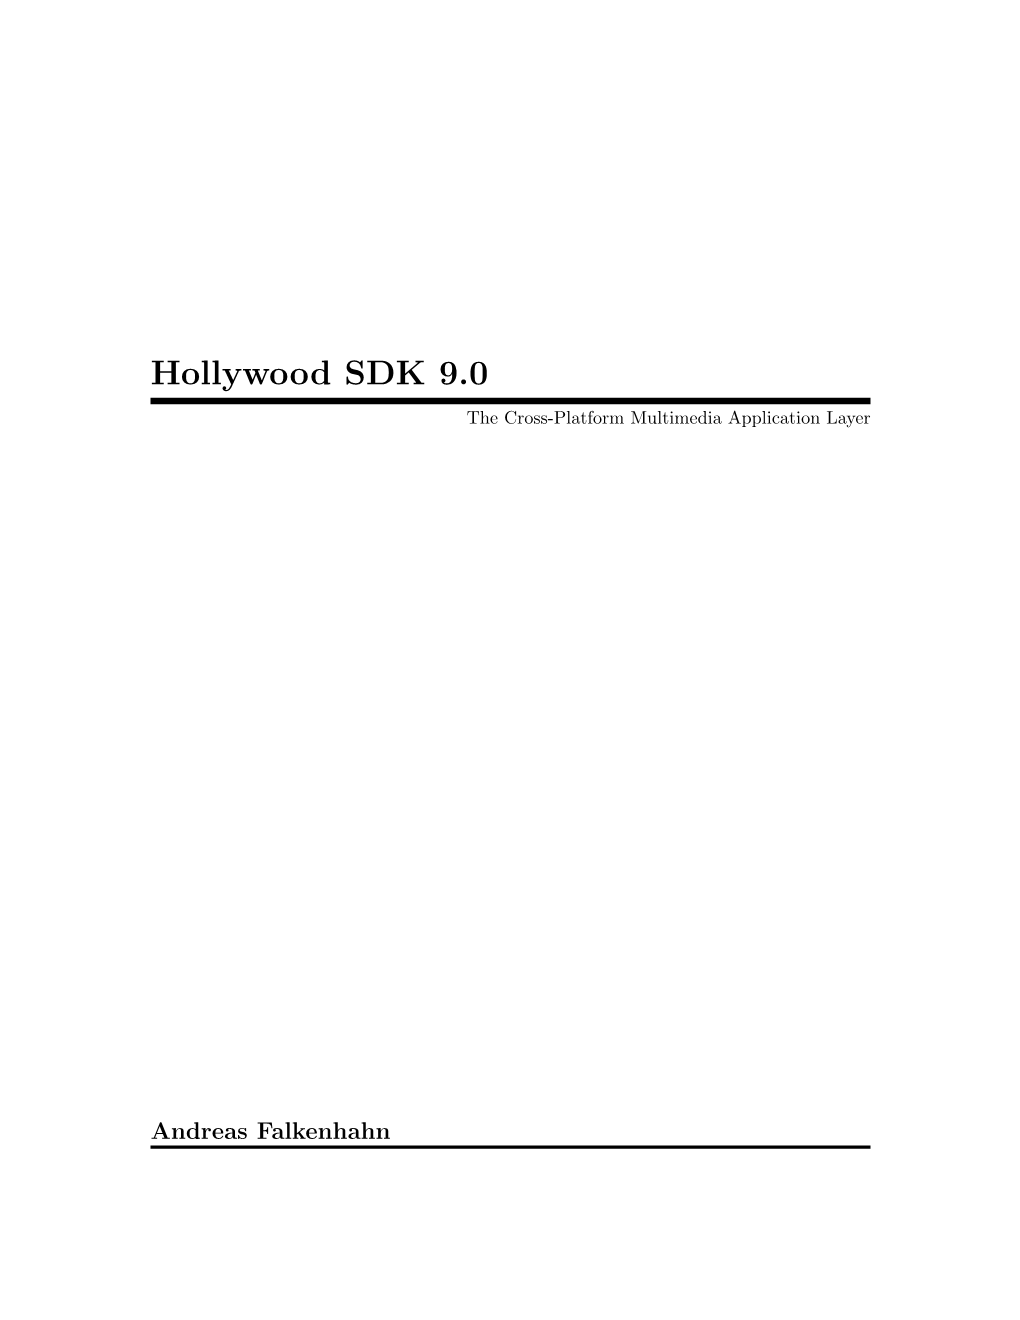 Hollywood SDK 9.0 the Cross-Platform Multimedia Application Layer